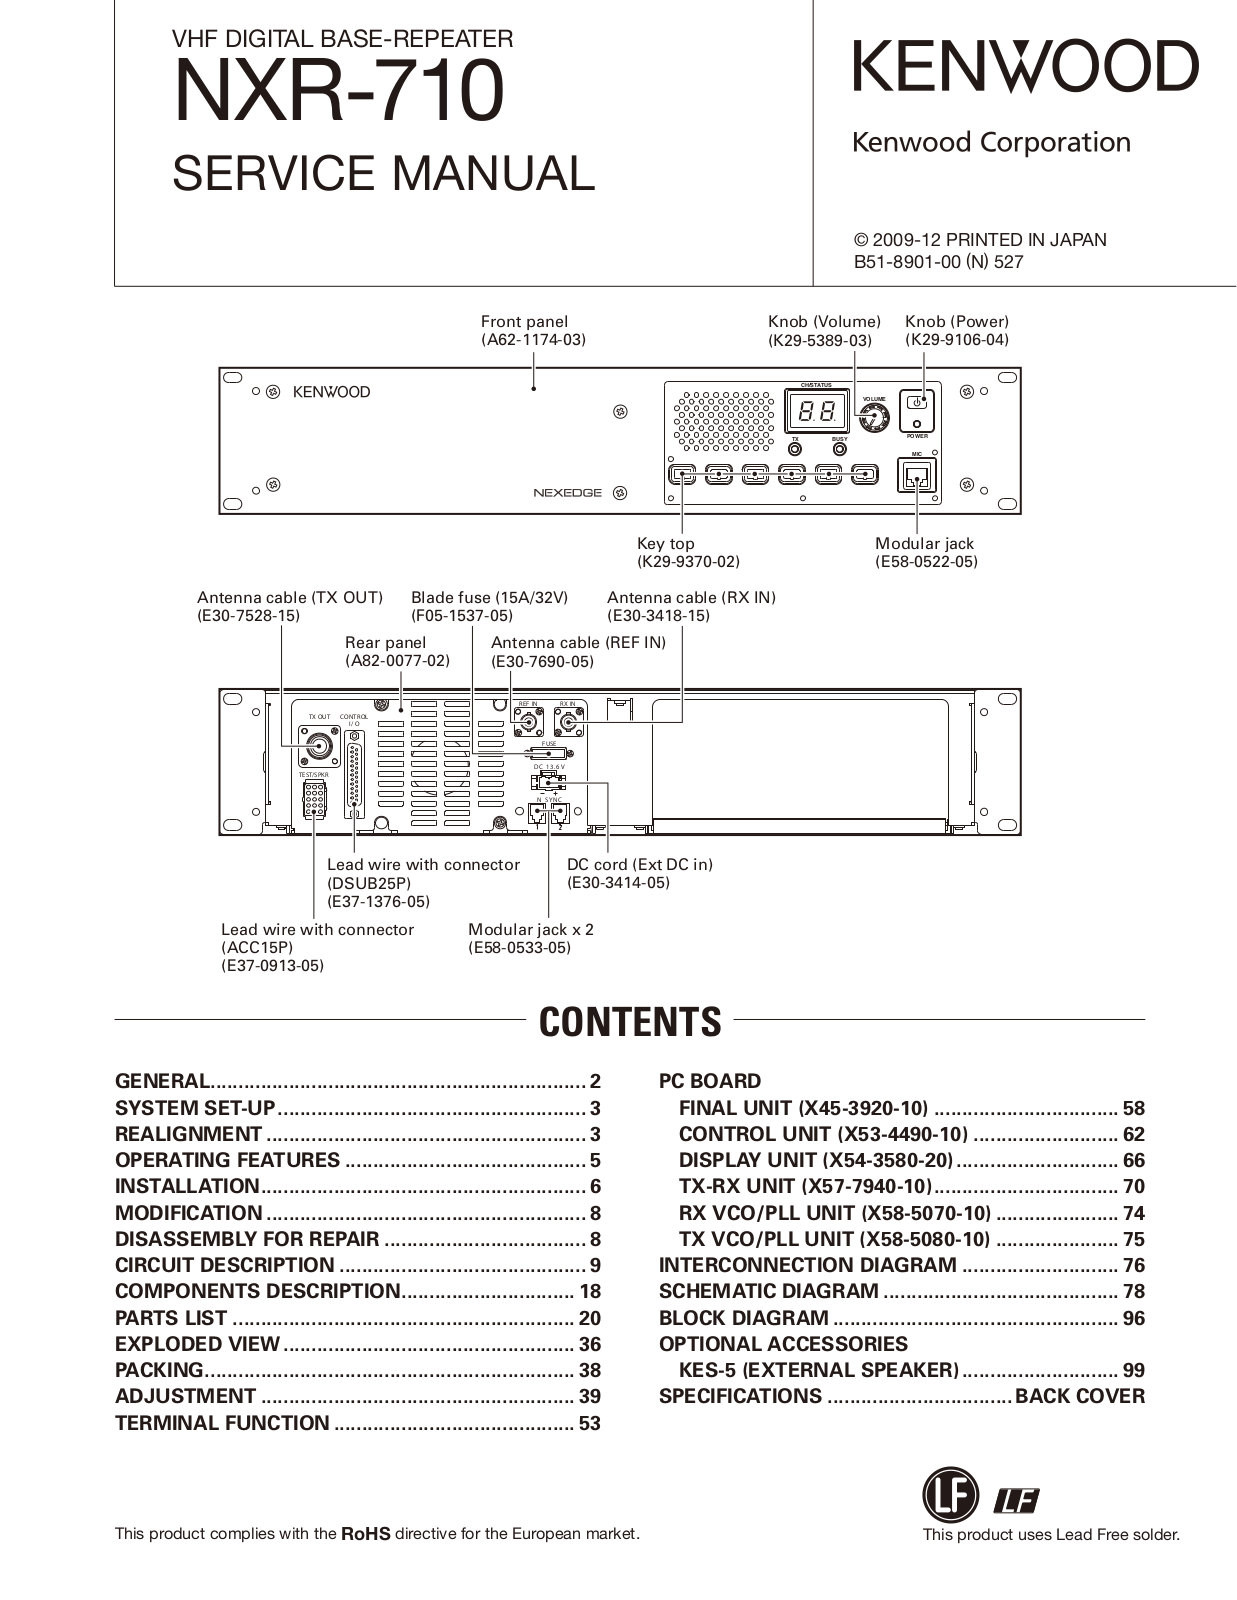 Kenwood NX-R710 Service Manual